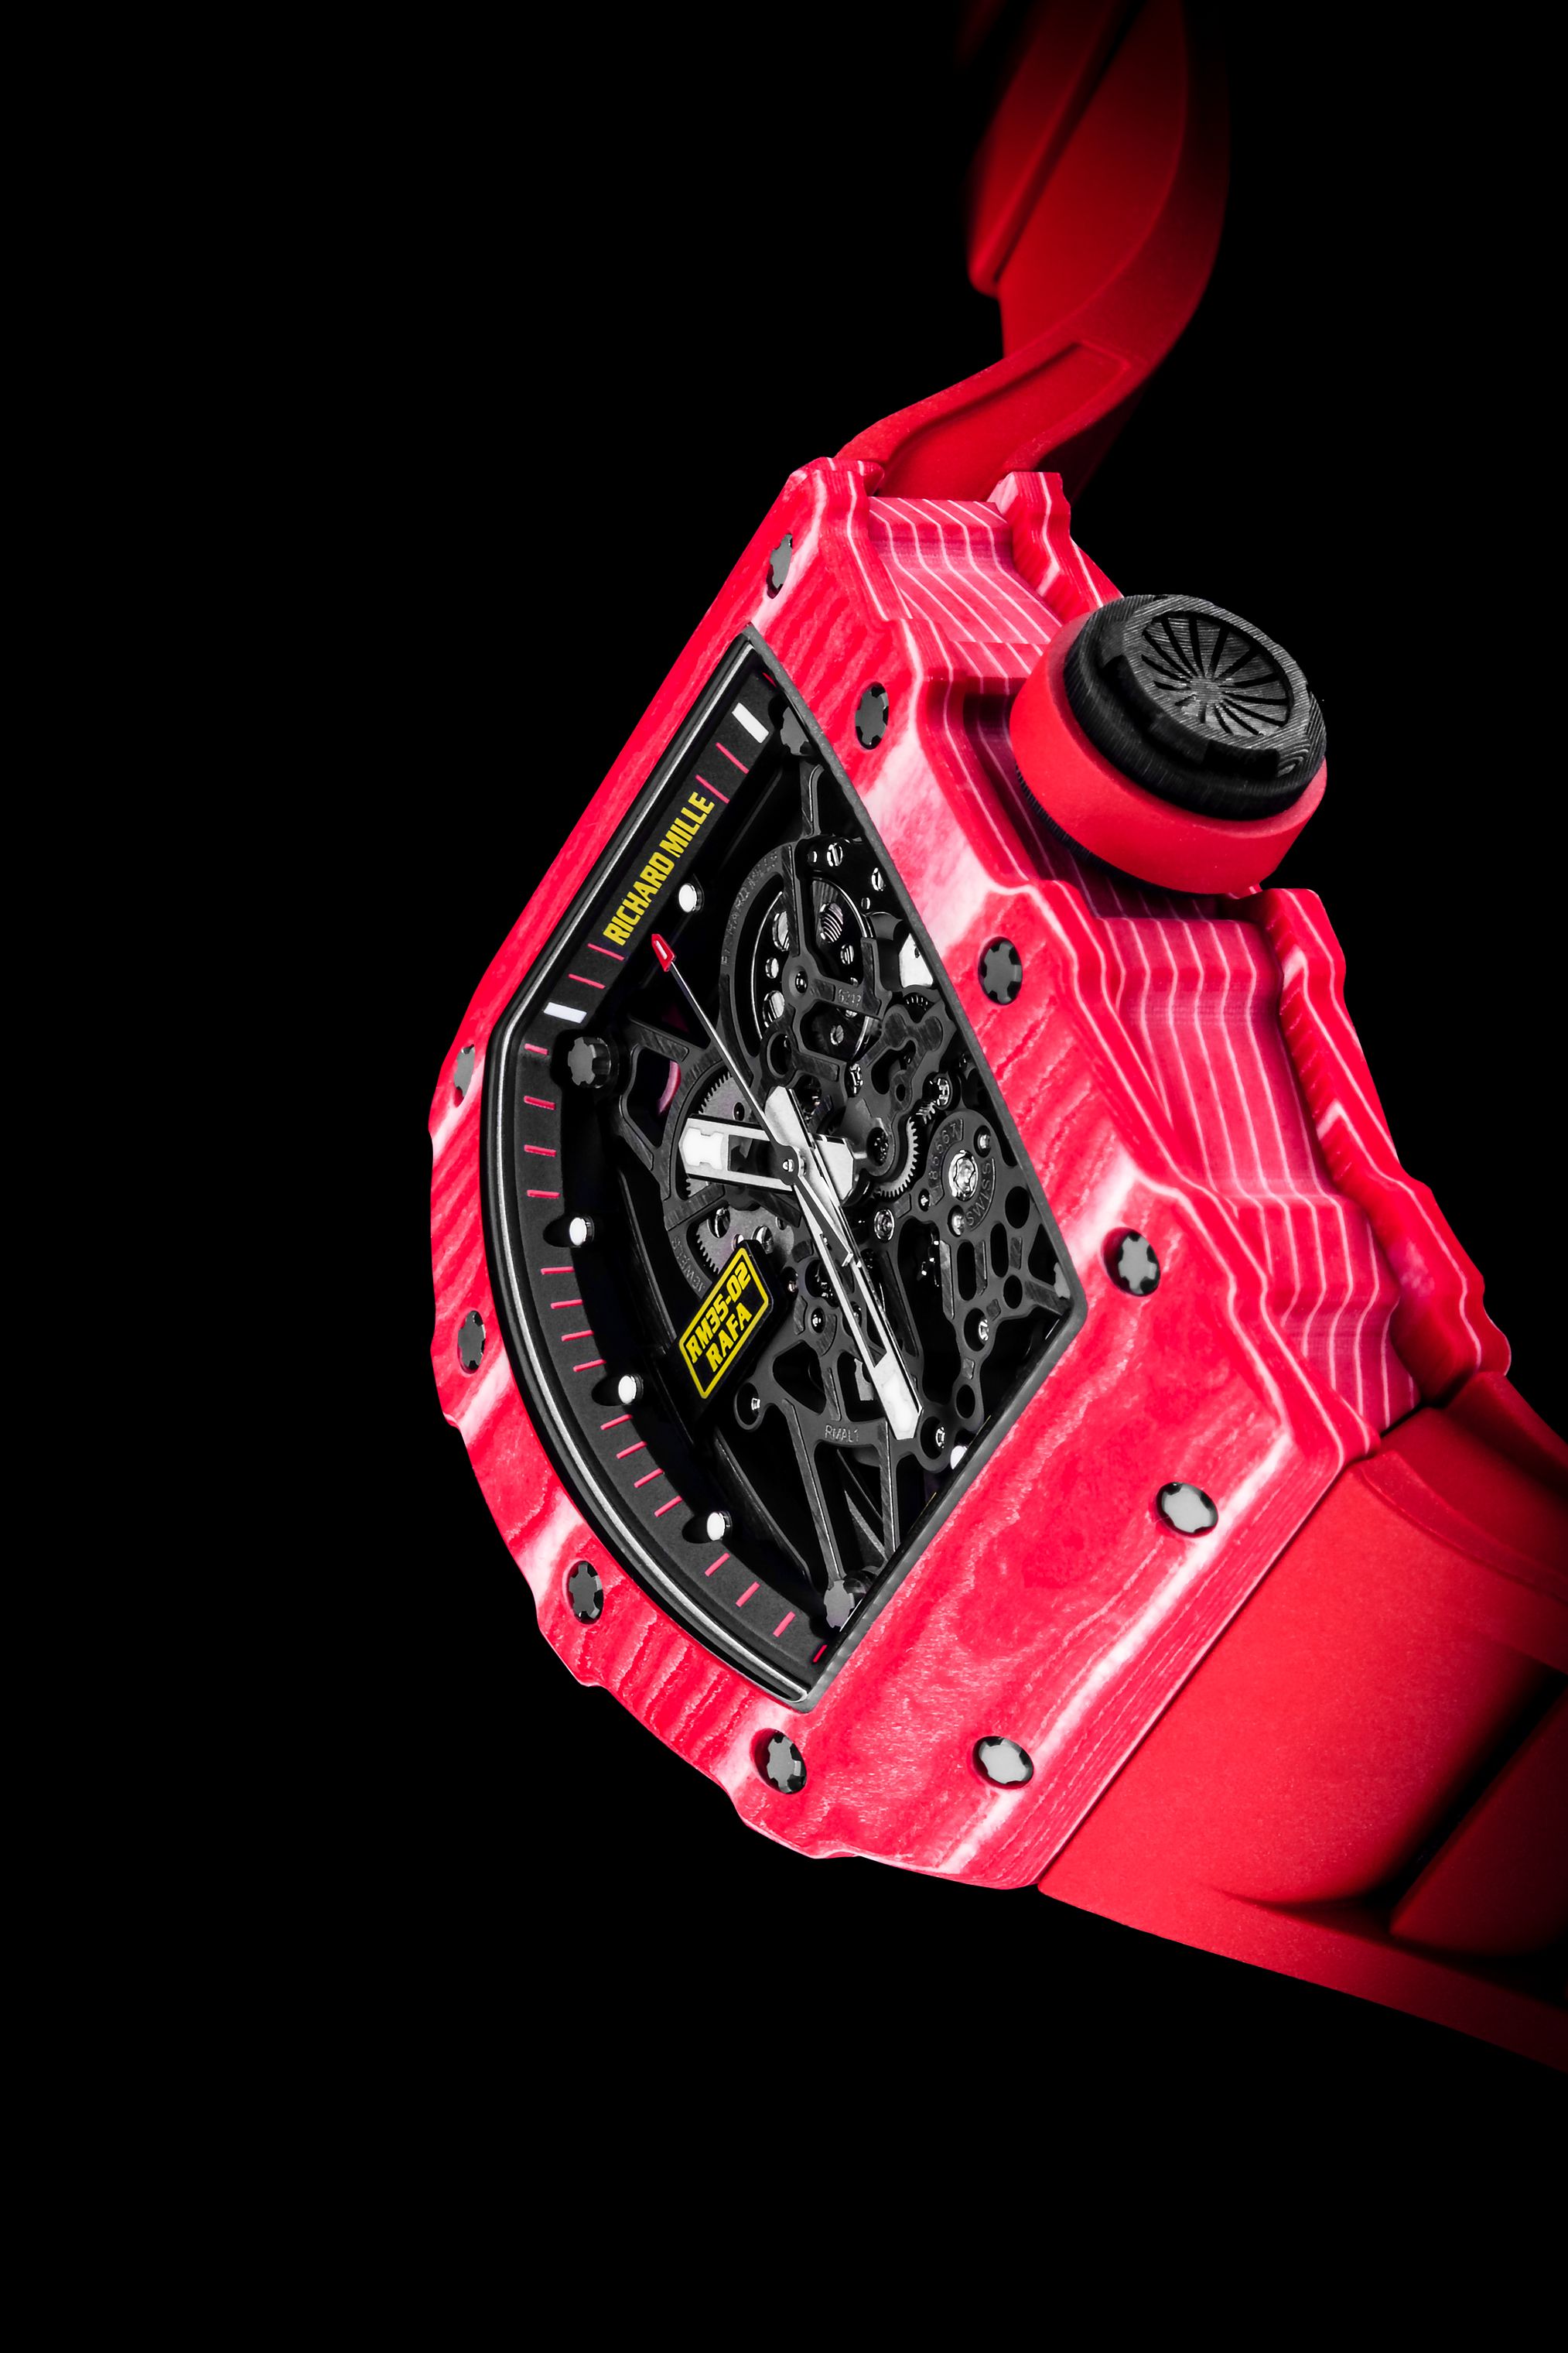 Richard Mille RM70-01 Limited Edition Alain Prost Carbon Skeleton Dial Watch RM 70-01Richard Mille RM70-01 Tourbillon Alain Prost RM70-01 CA